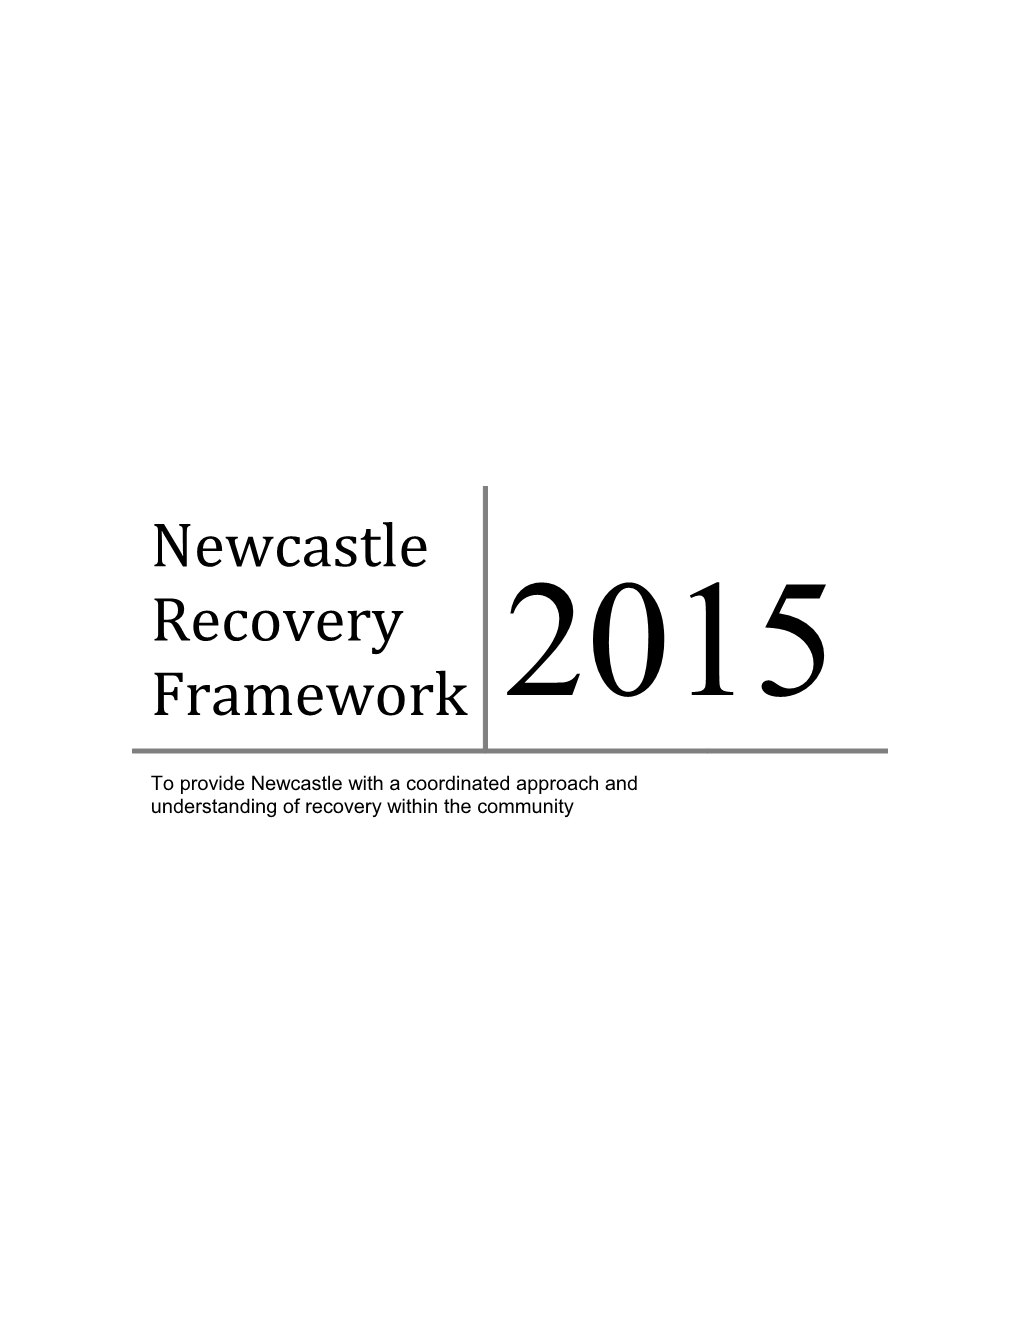 Newcastle Recovery Framework